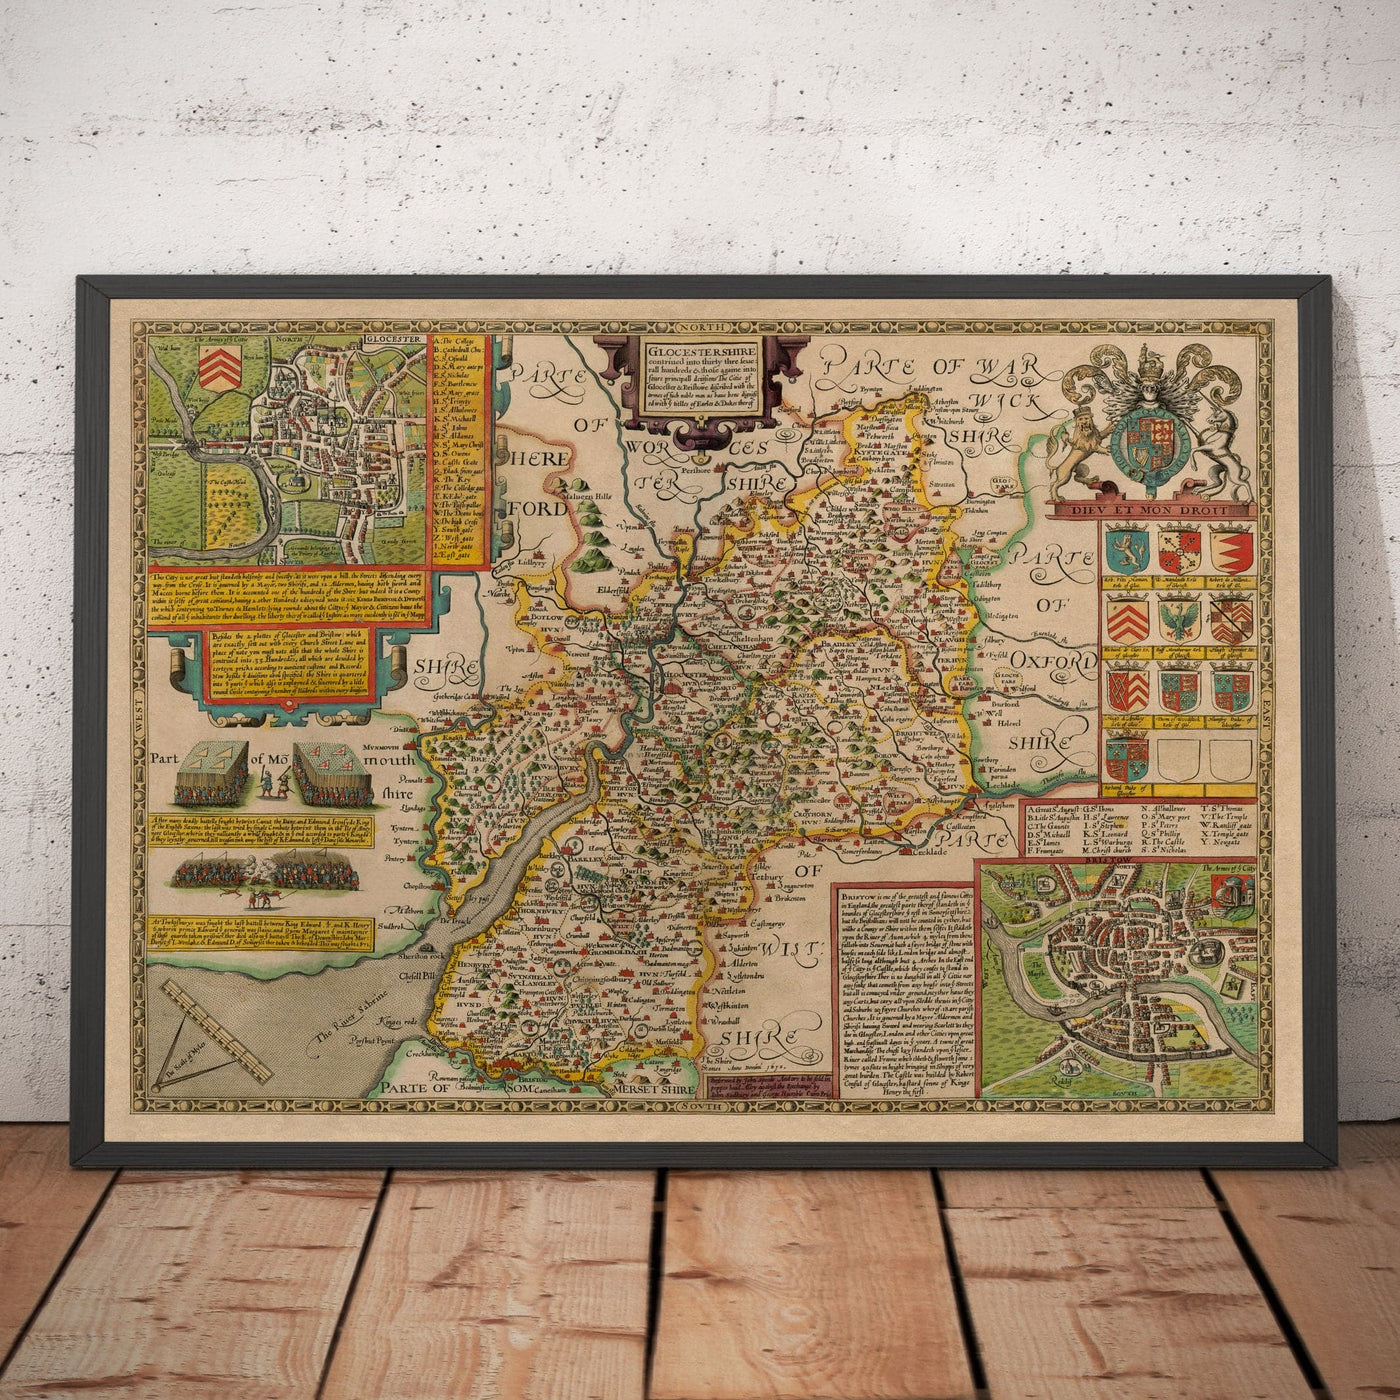 Viejo Mapa de Gloucestershire, 1611, John Speed ​​- Bristol, Cheltenham, Gloucester, Kingswood, Filton